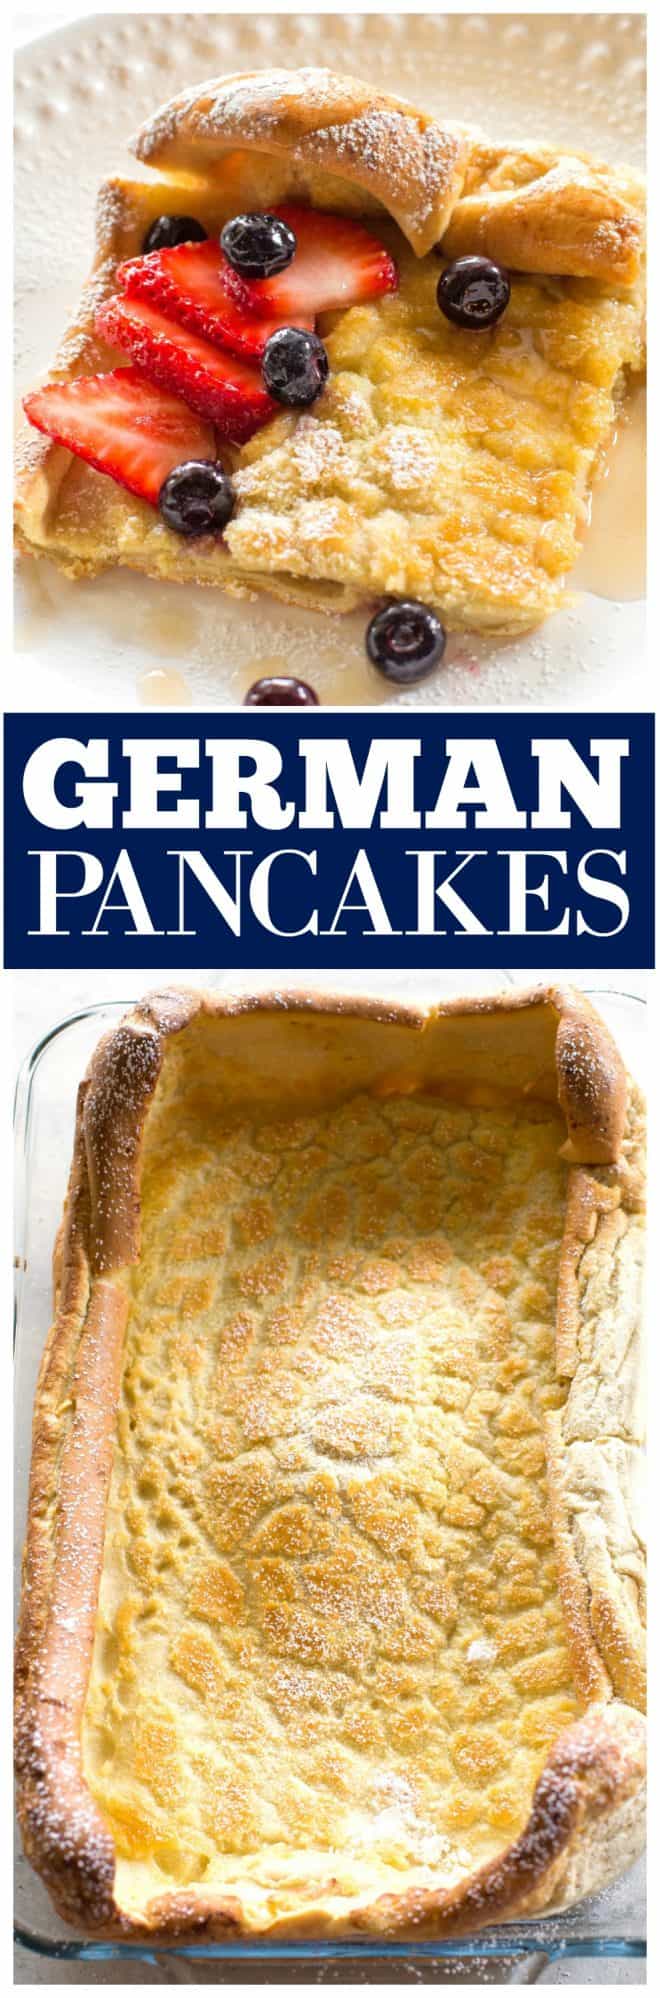 German Pancakes with fruit